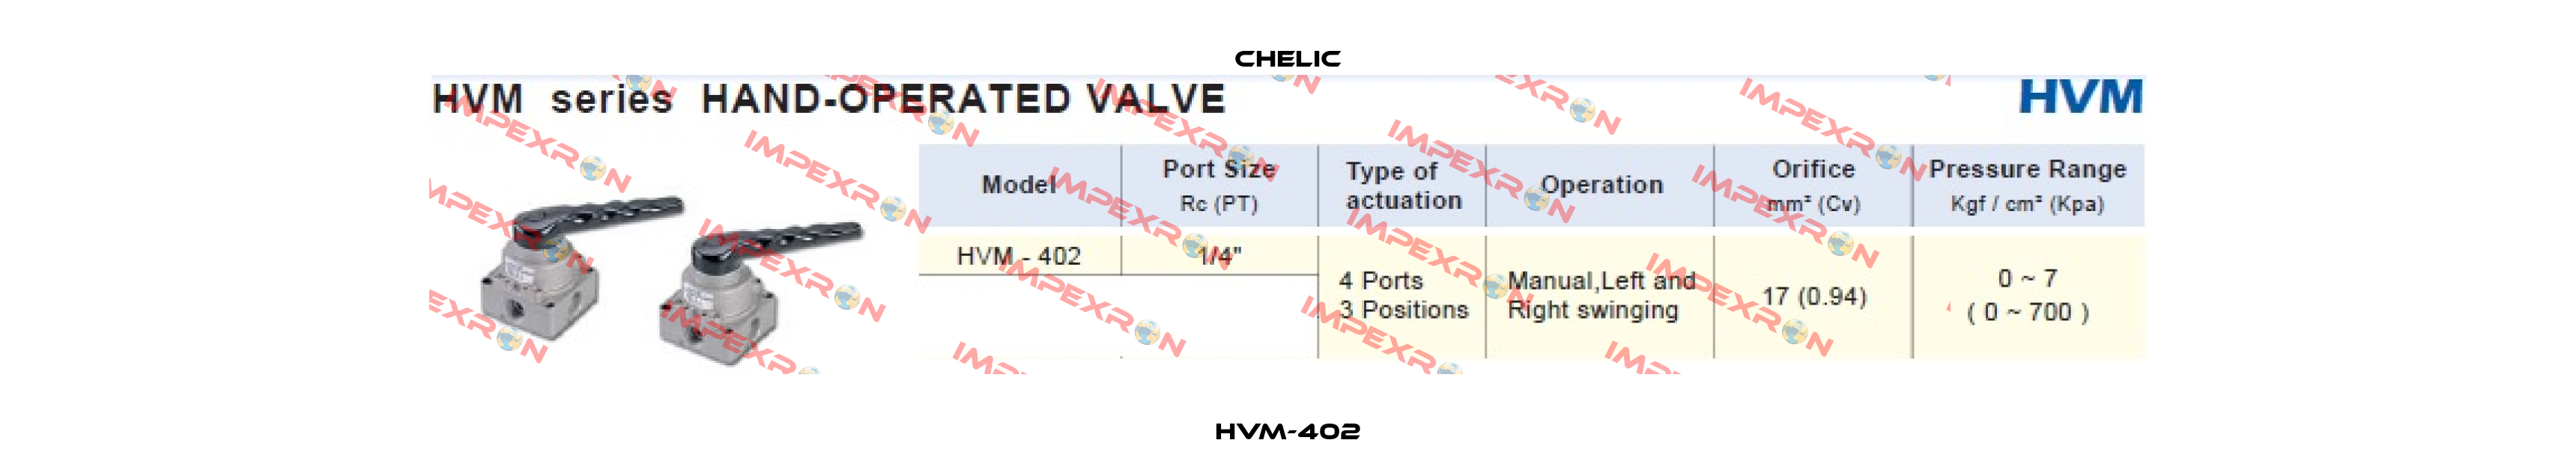 HVM-402 Chelic